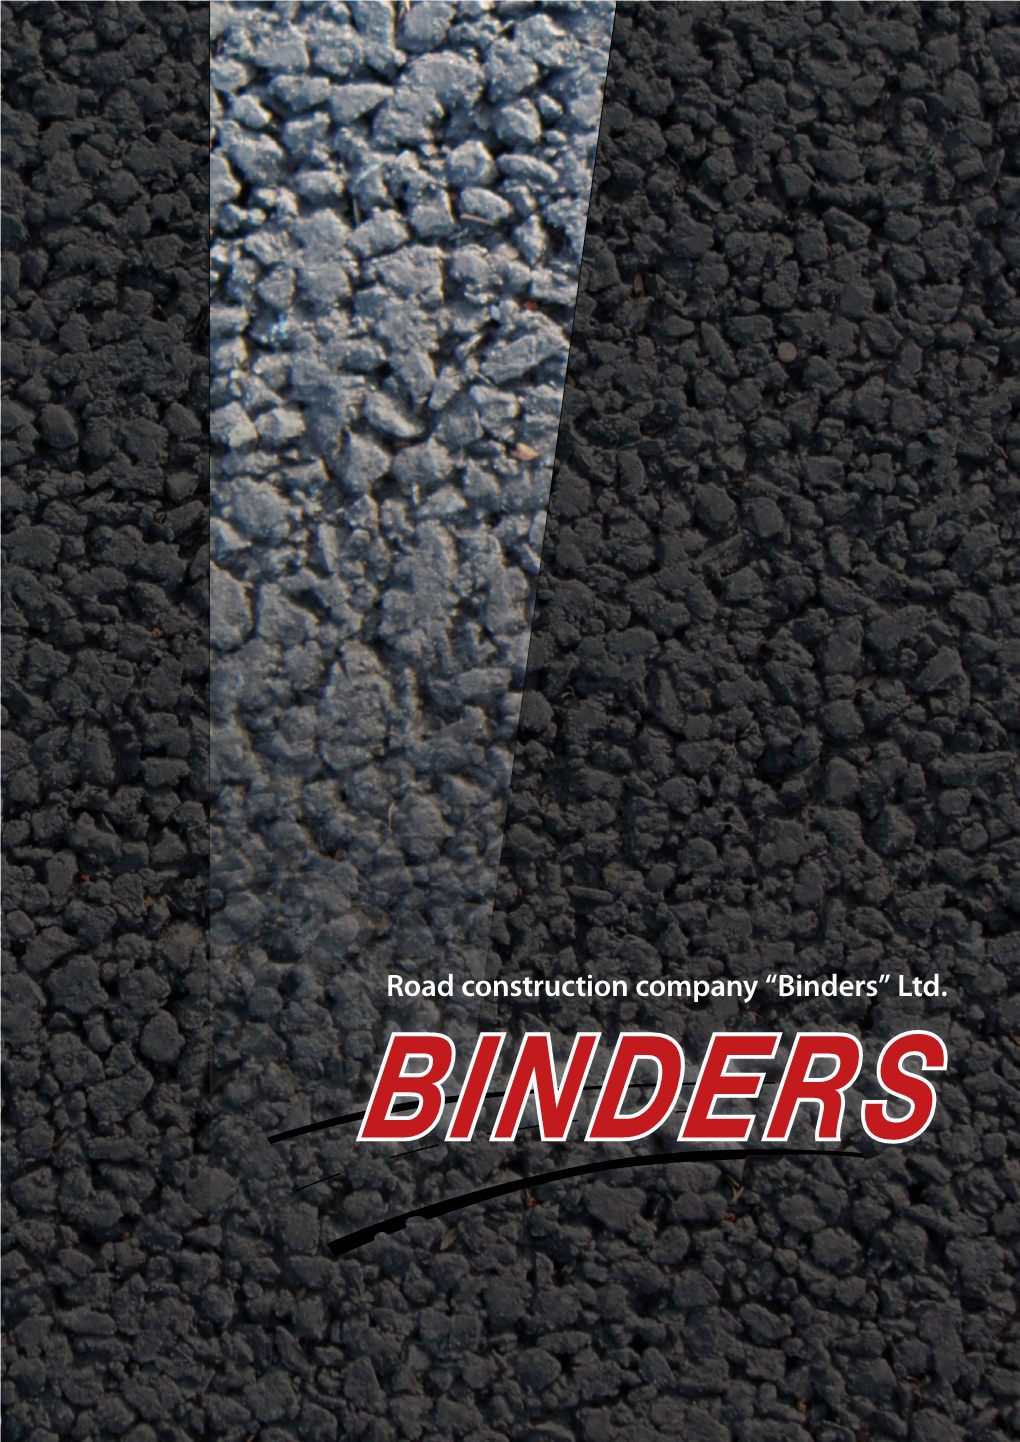 Road Construction Company “Binders” Ltd